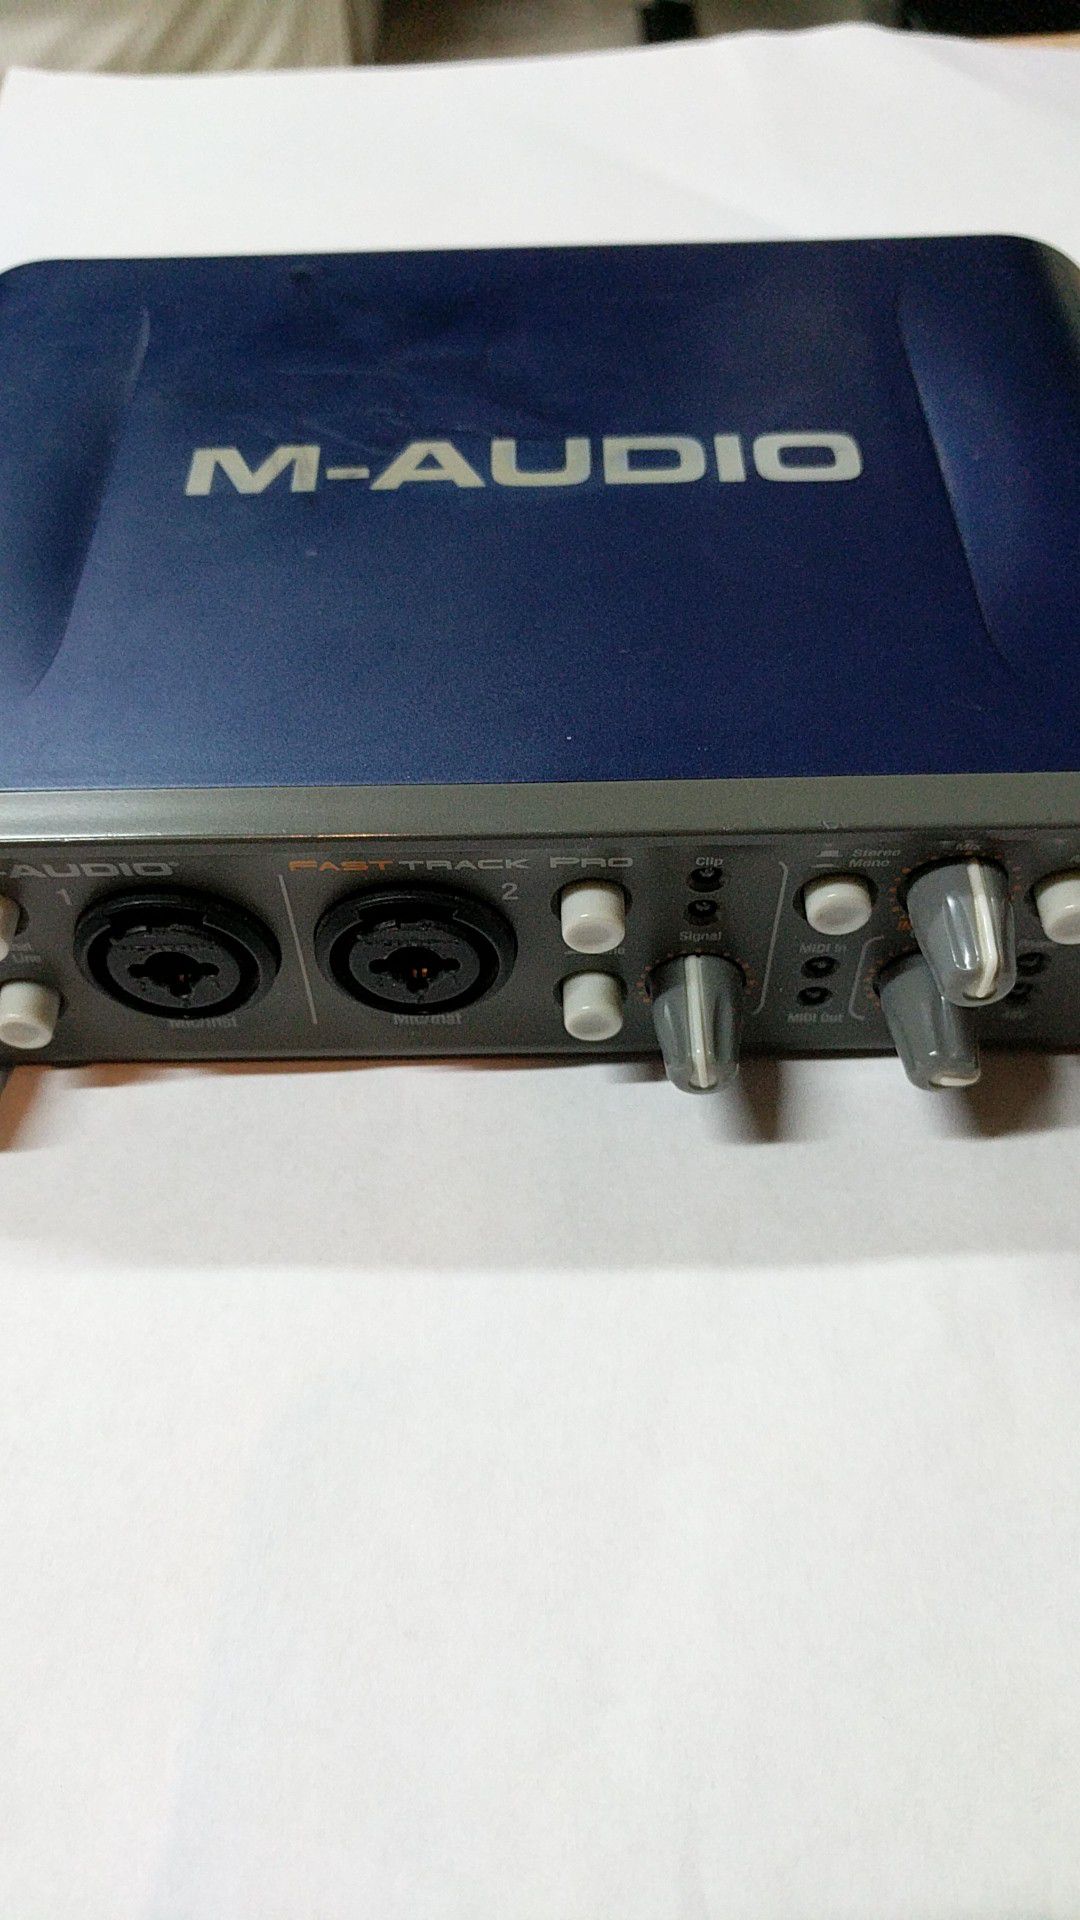 M-AUDIO FAST TRACK PRO. USB Audio Sound Card